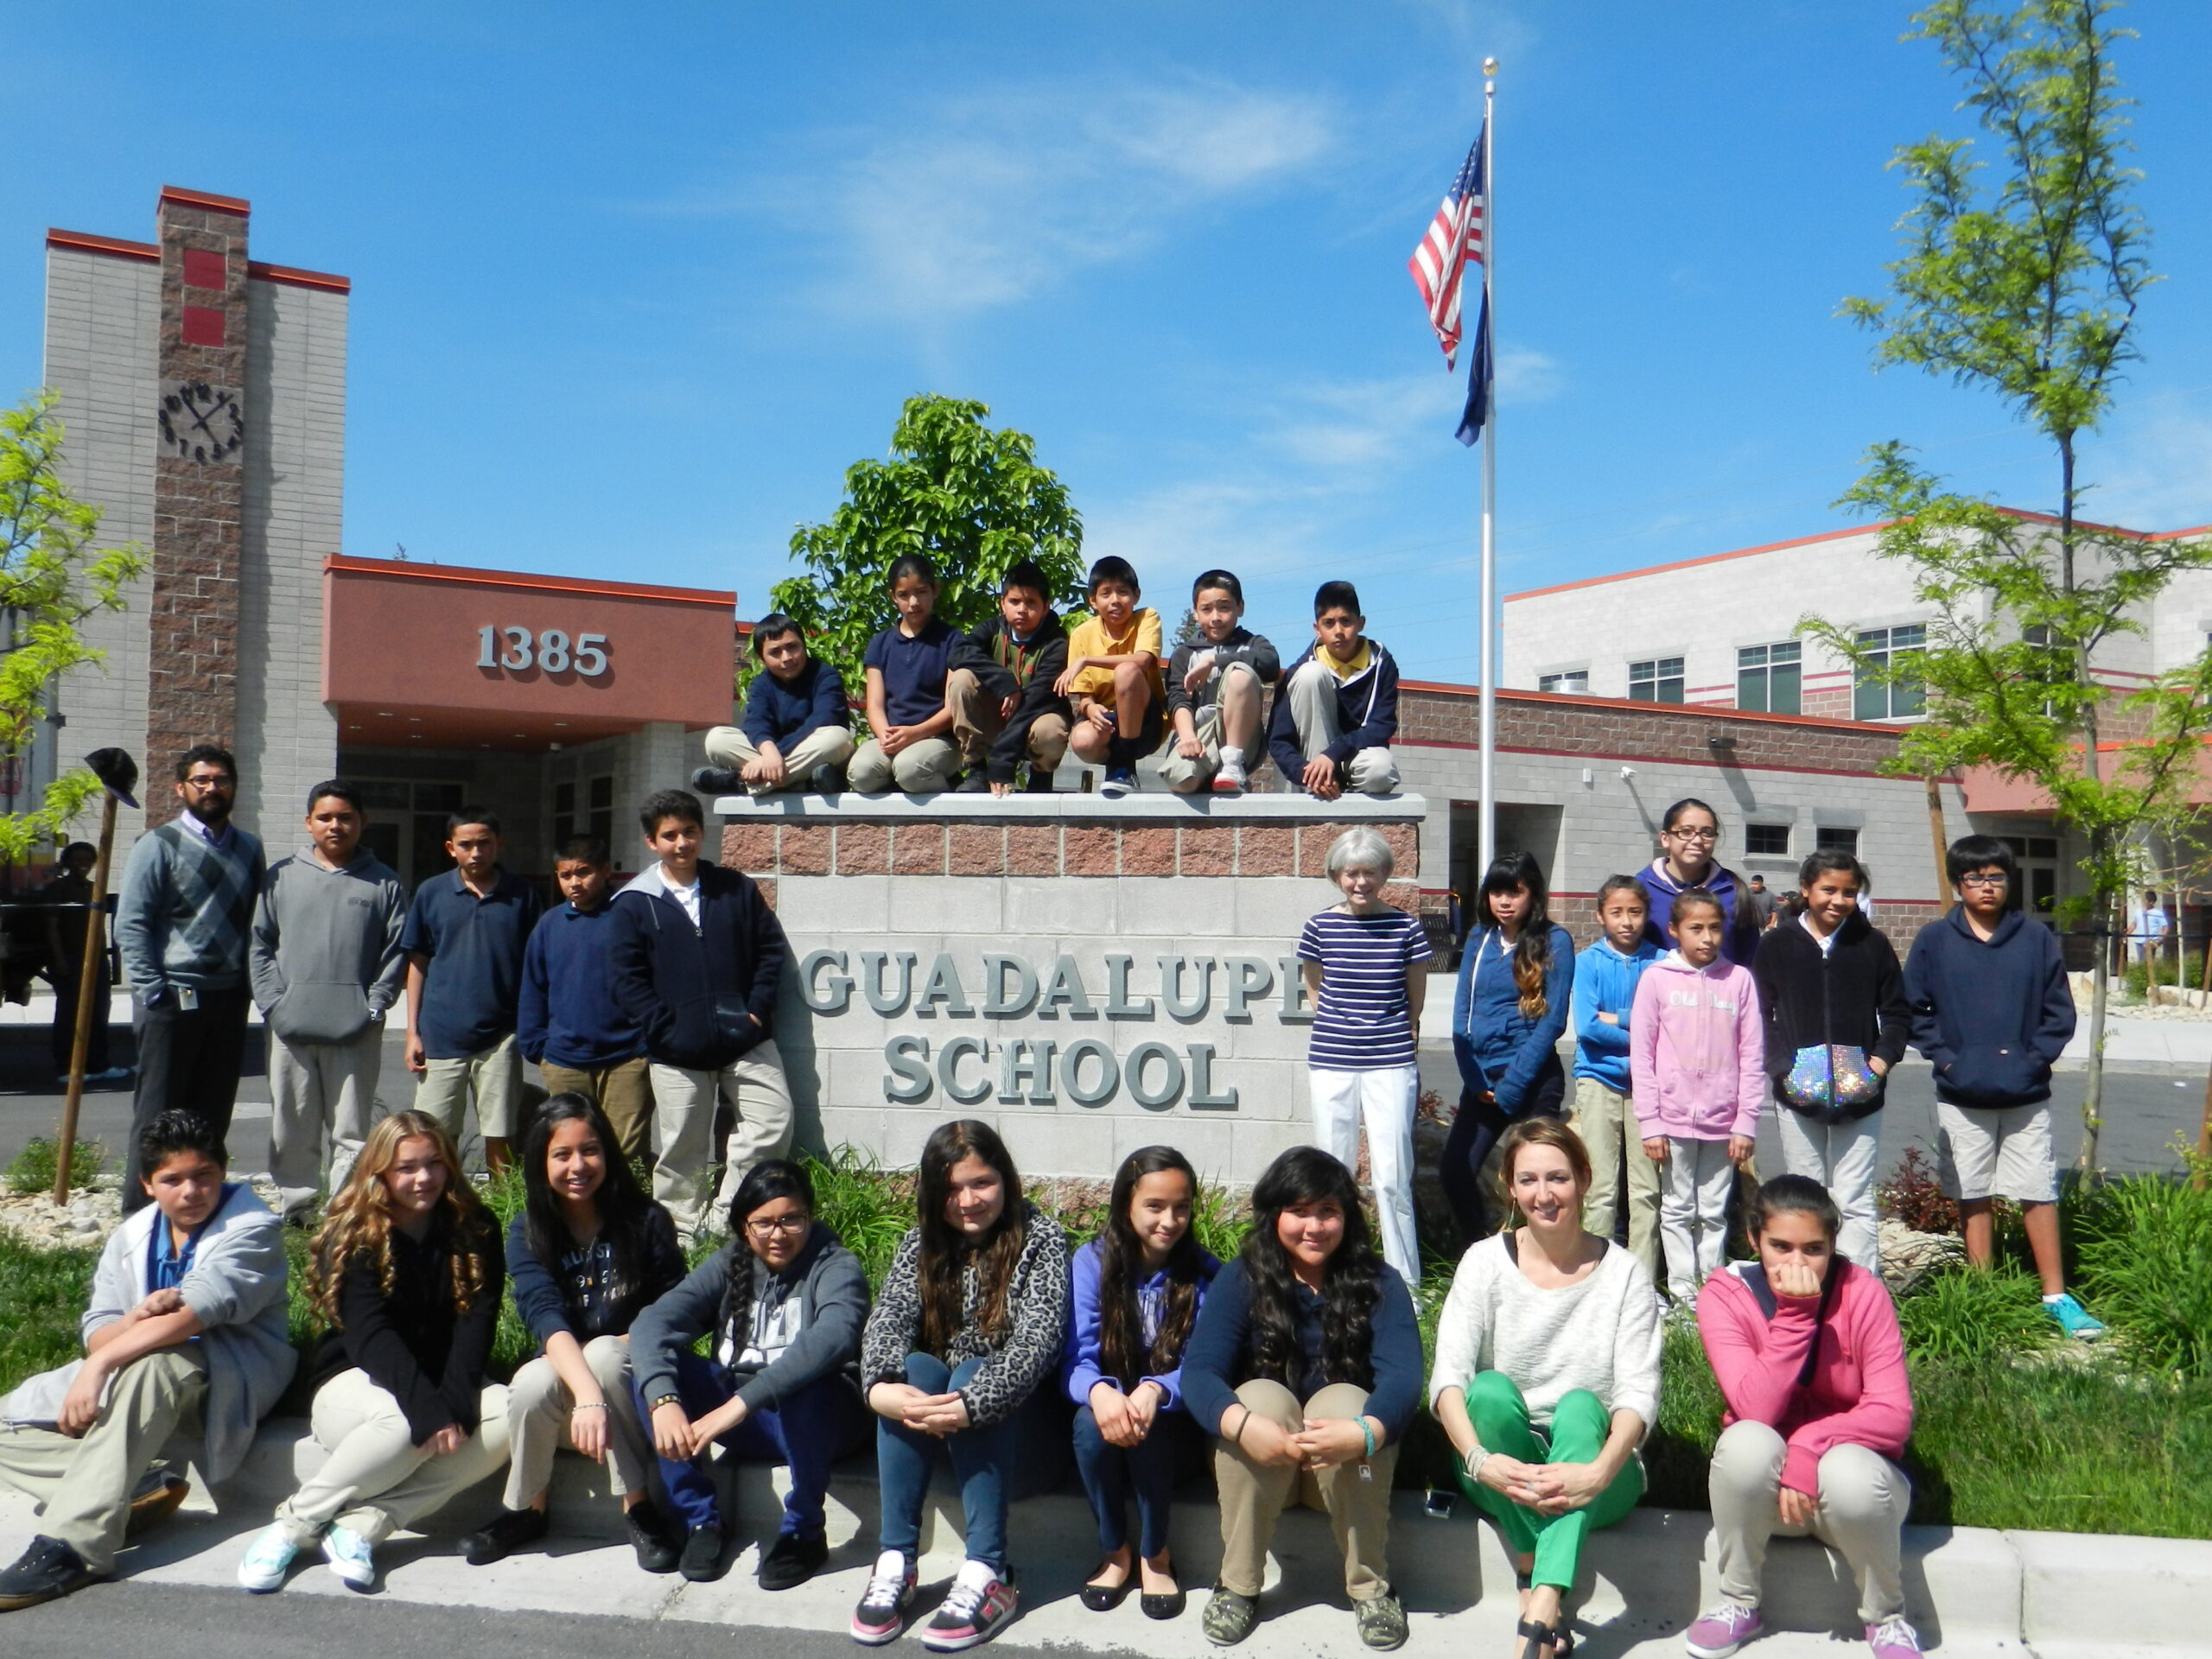 Guadalupe School